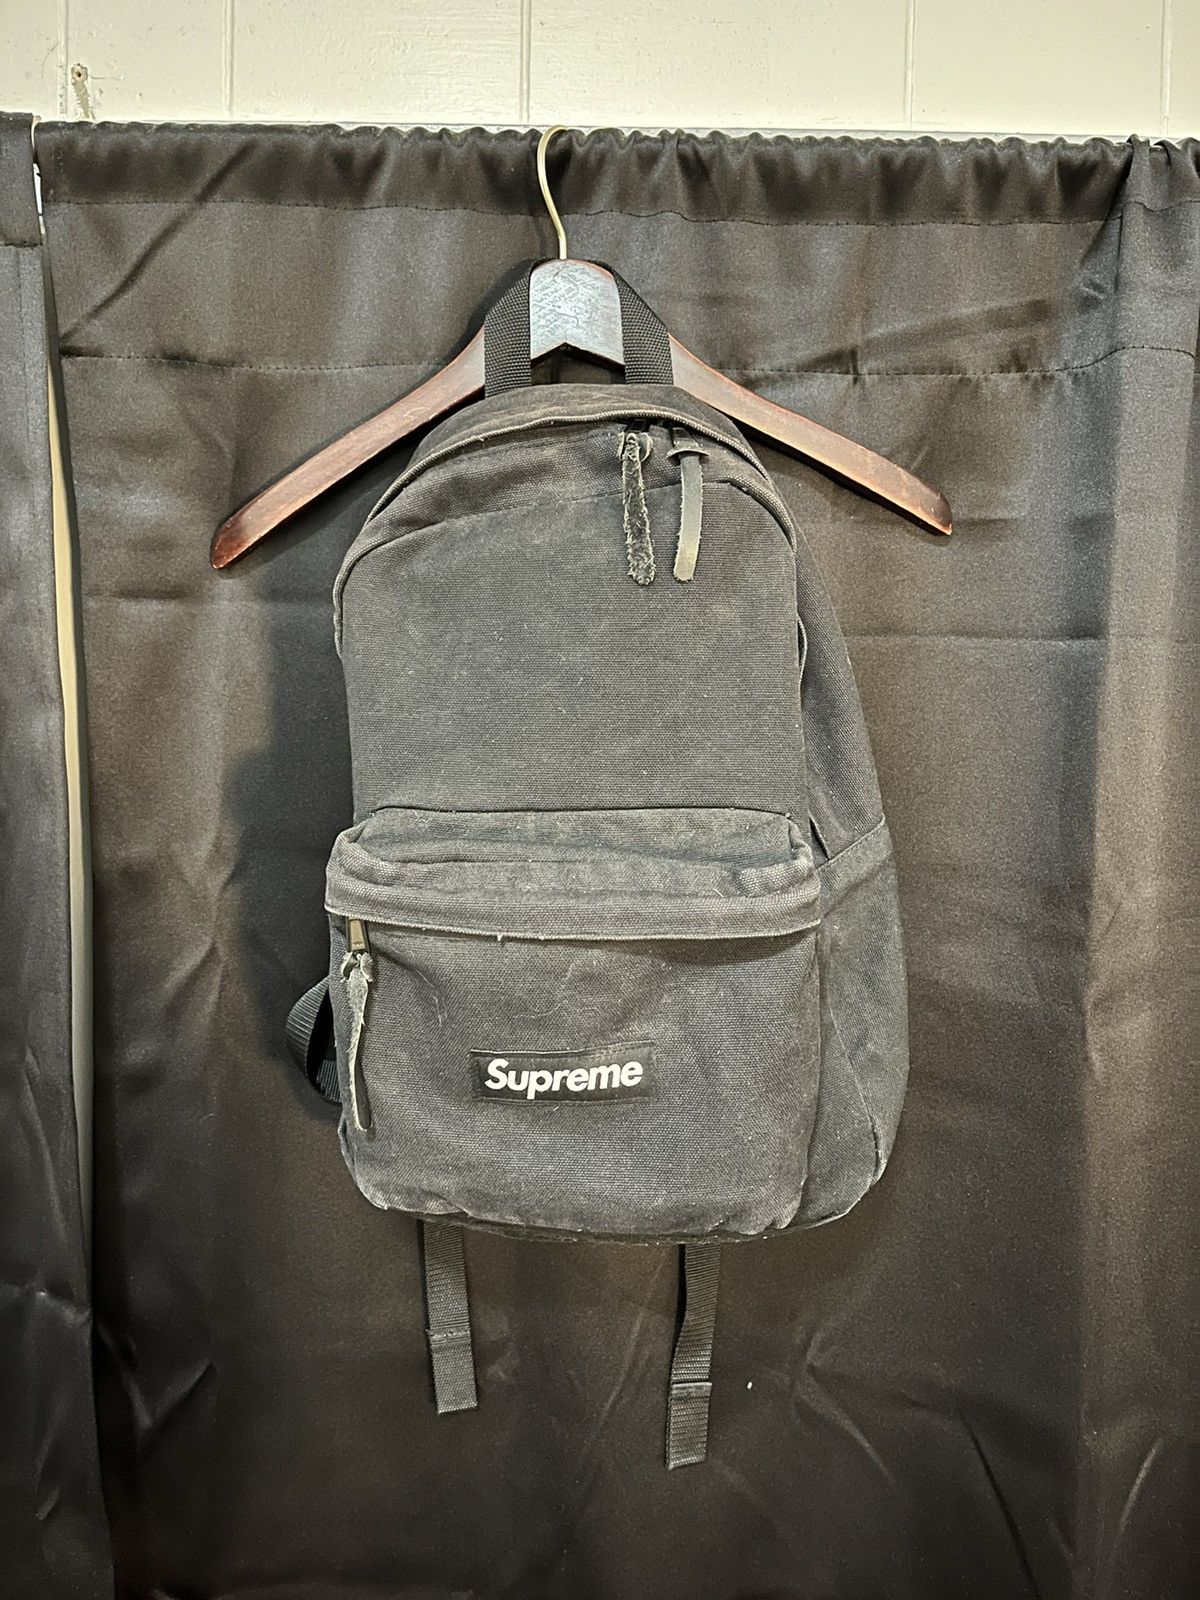 Supreme Canvas Backpack Black [FW20]